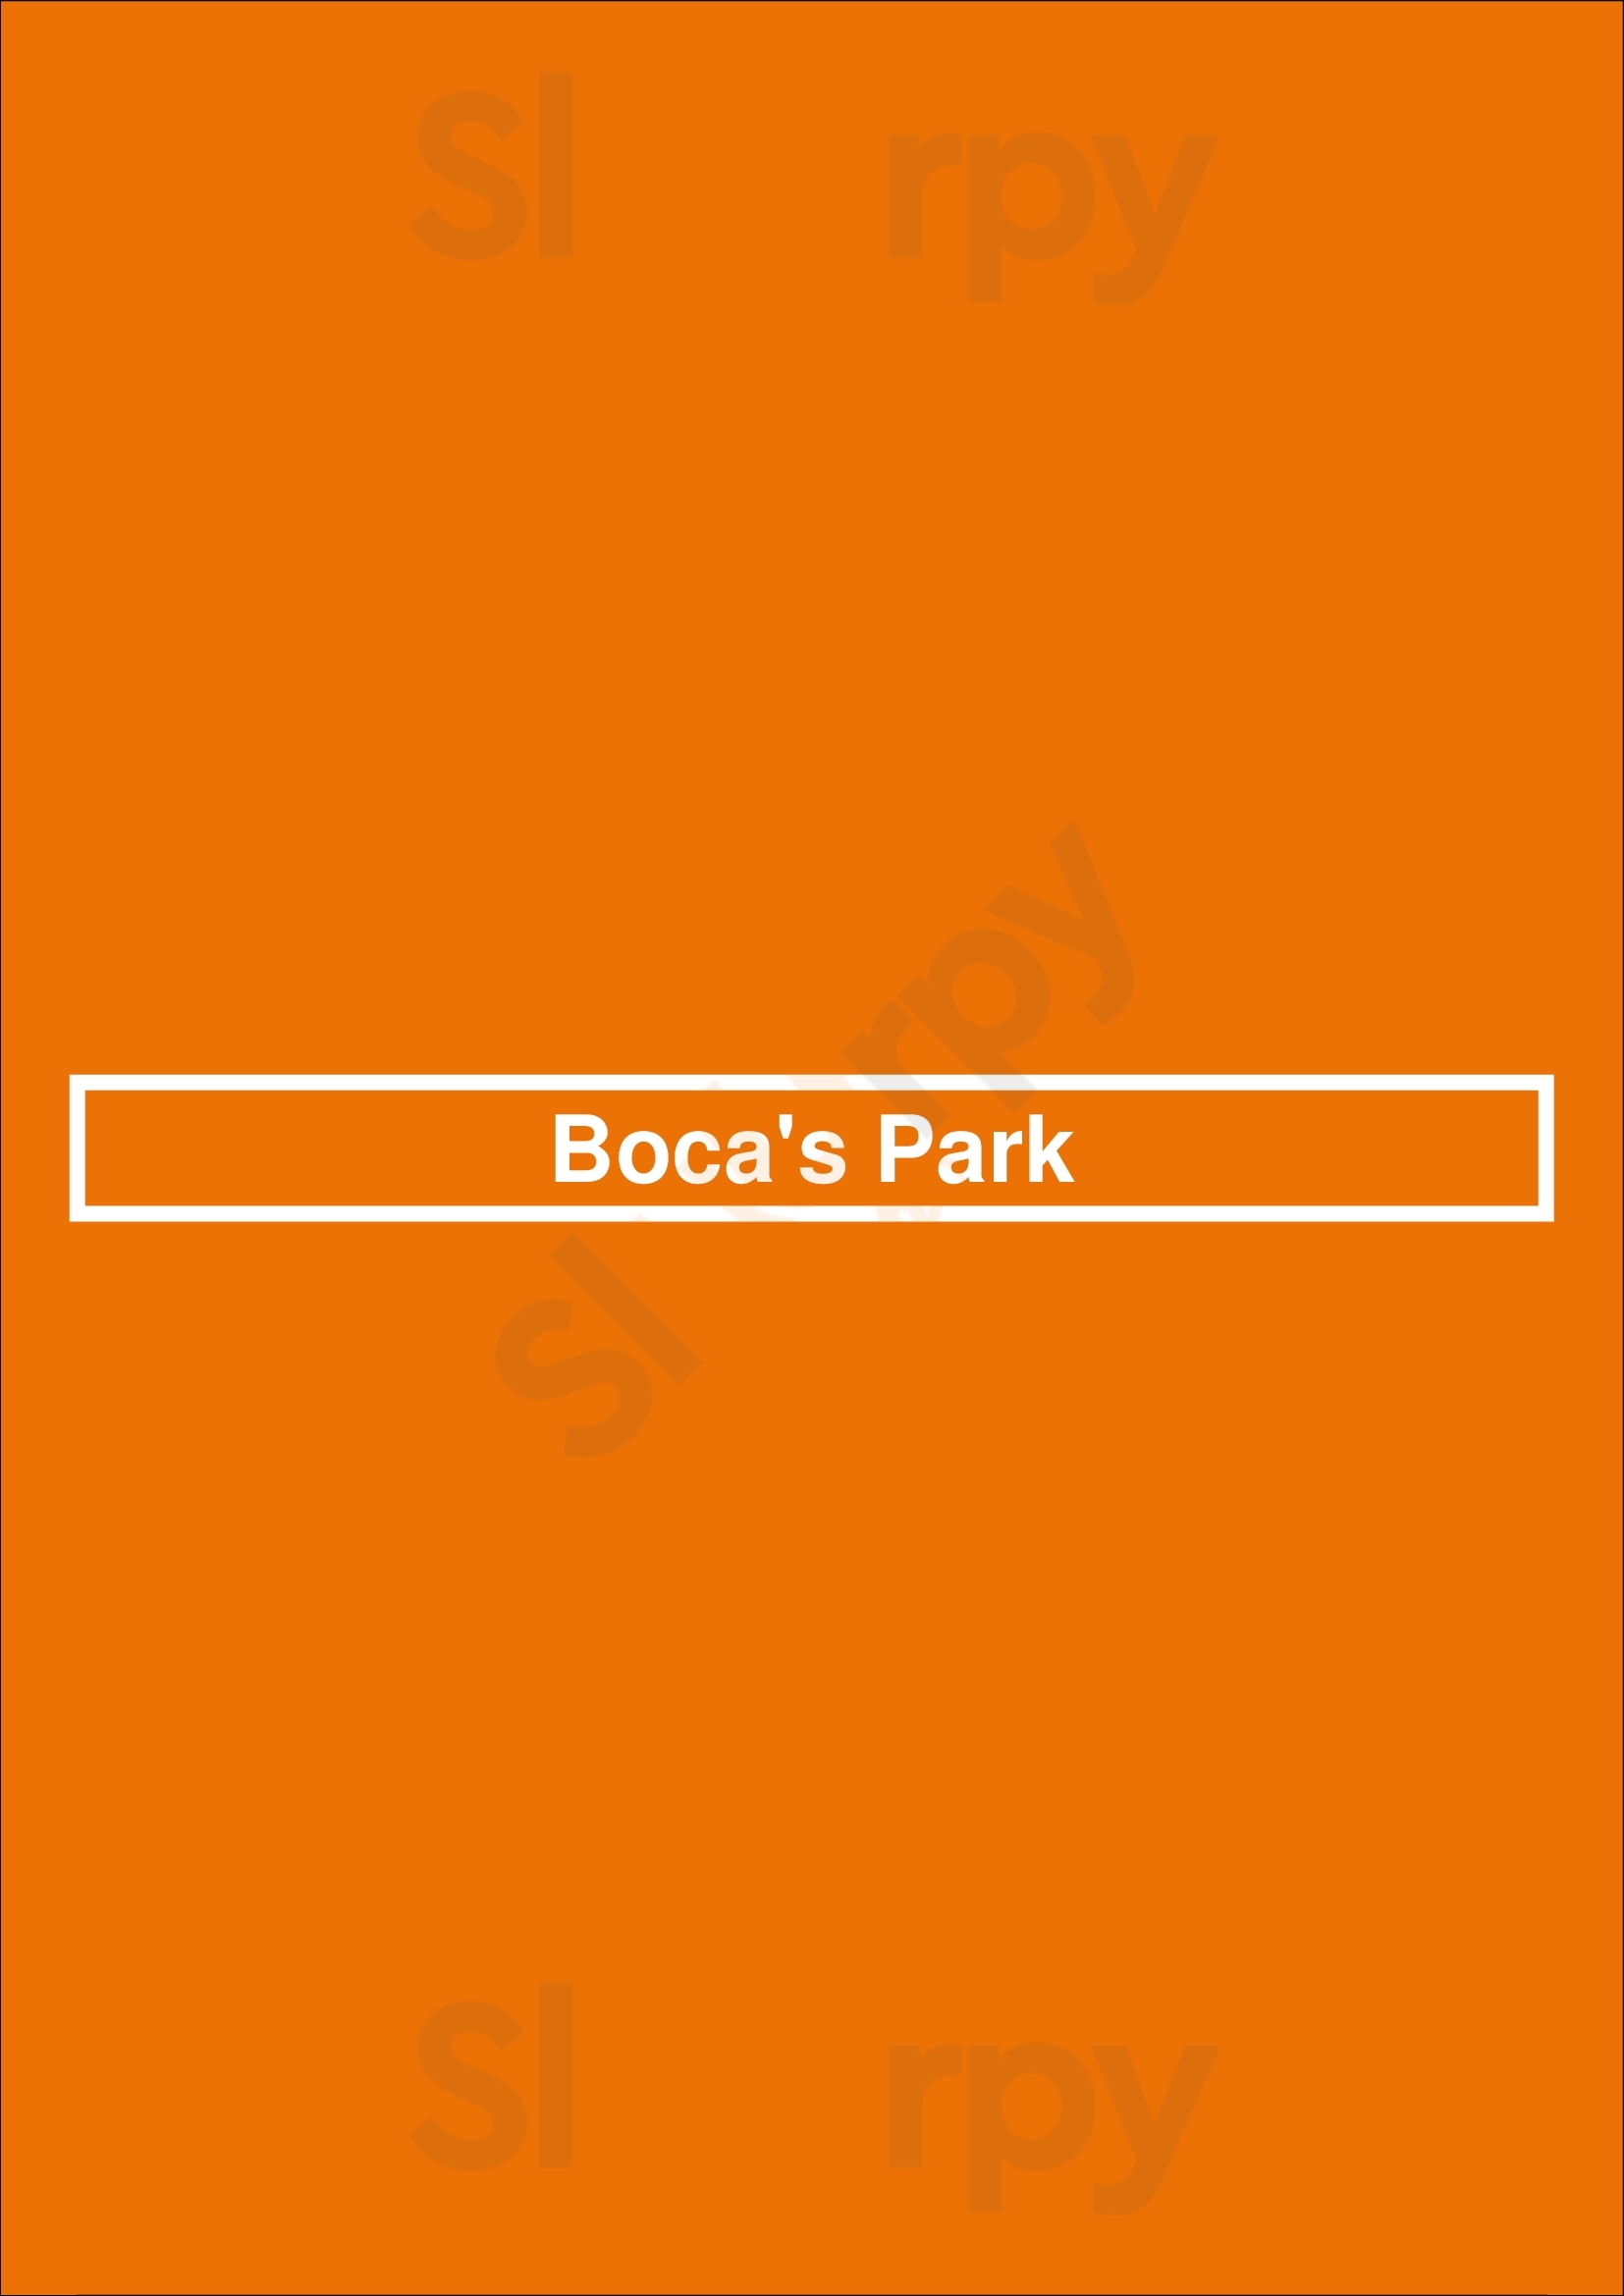 Boca's Park Amsterdam Menu - 1